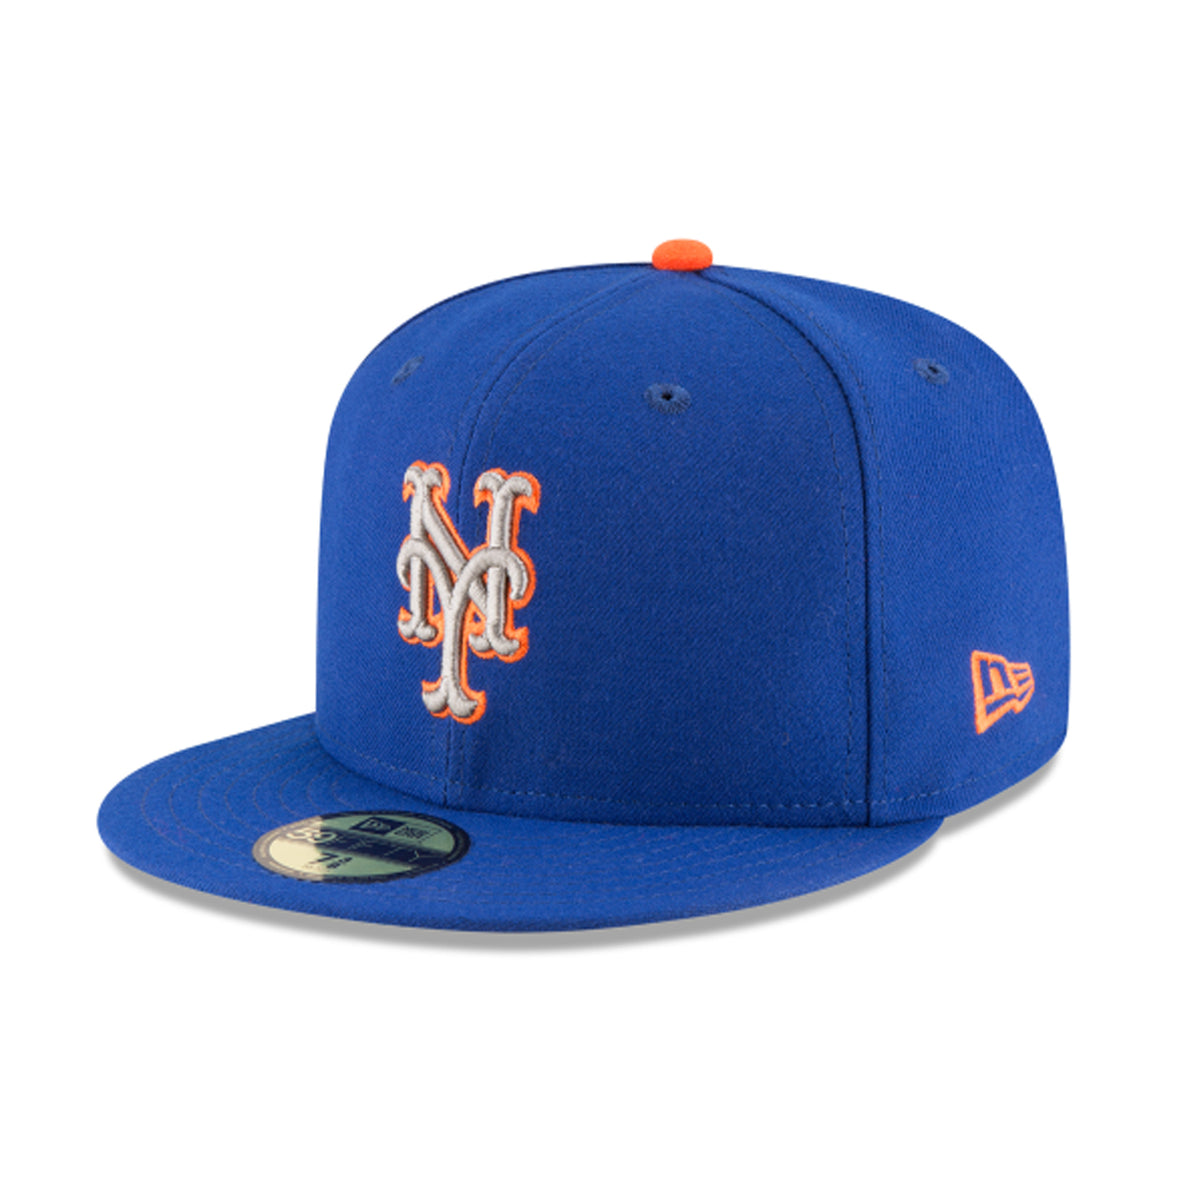 New Era, Accessories, New York Mets Hat With Pink Brim